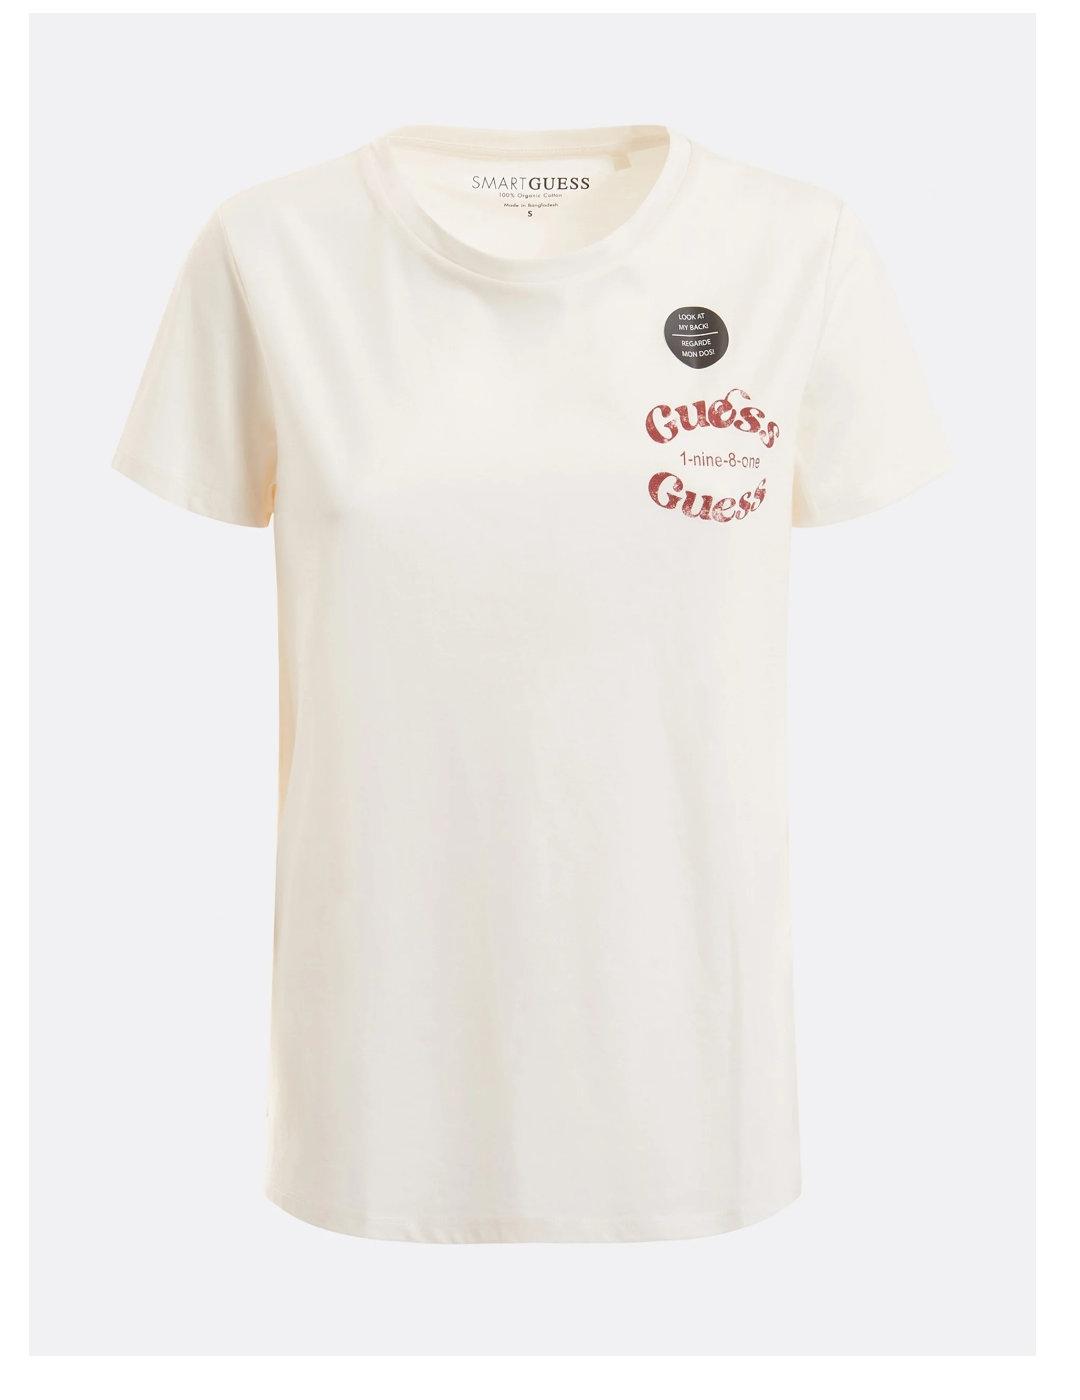 Camiseta Guess Cherry beige para mujer -b